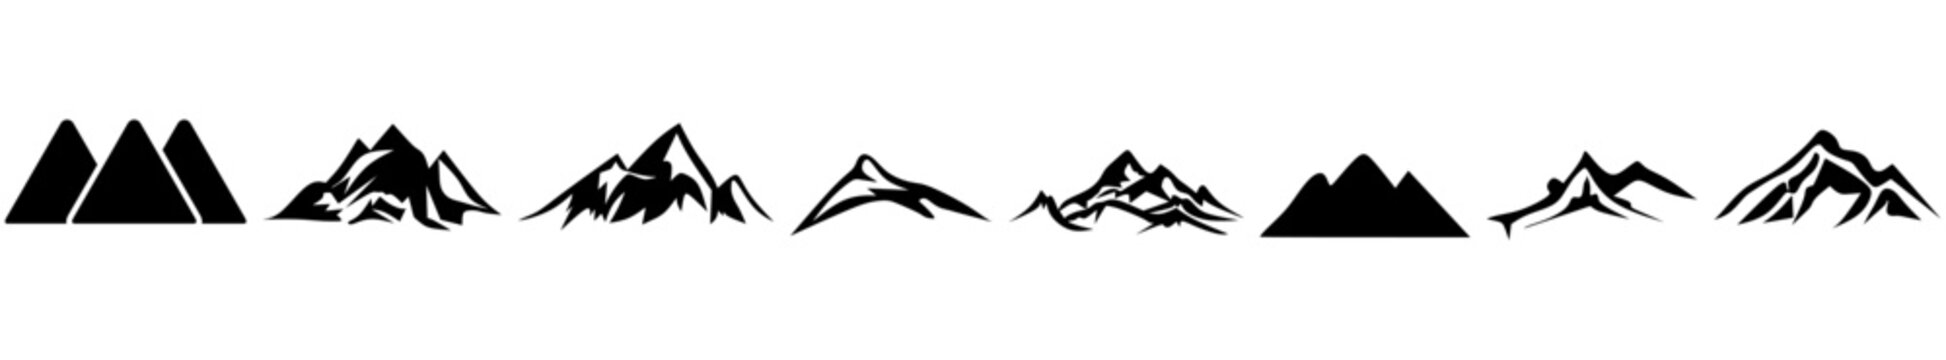 Black mountain icon collection. Set of black mountain logo. Adventure, camping, hiking logo collection.